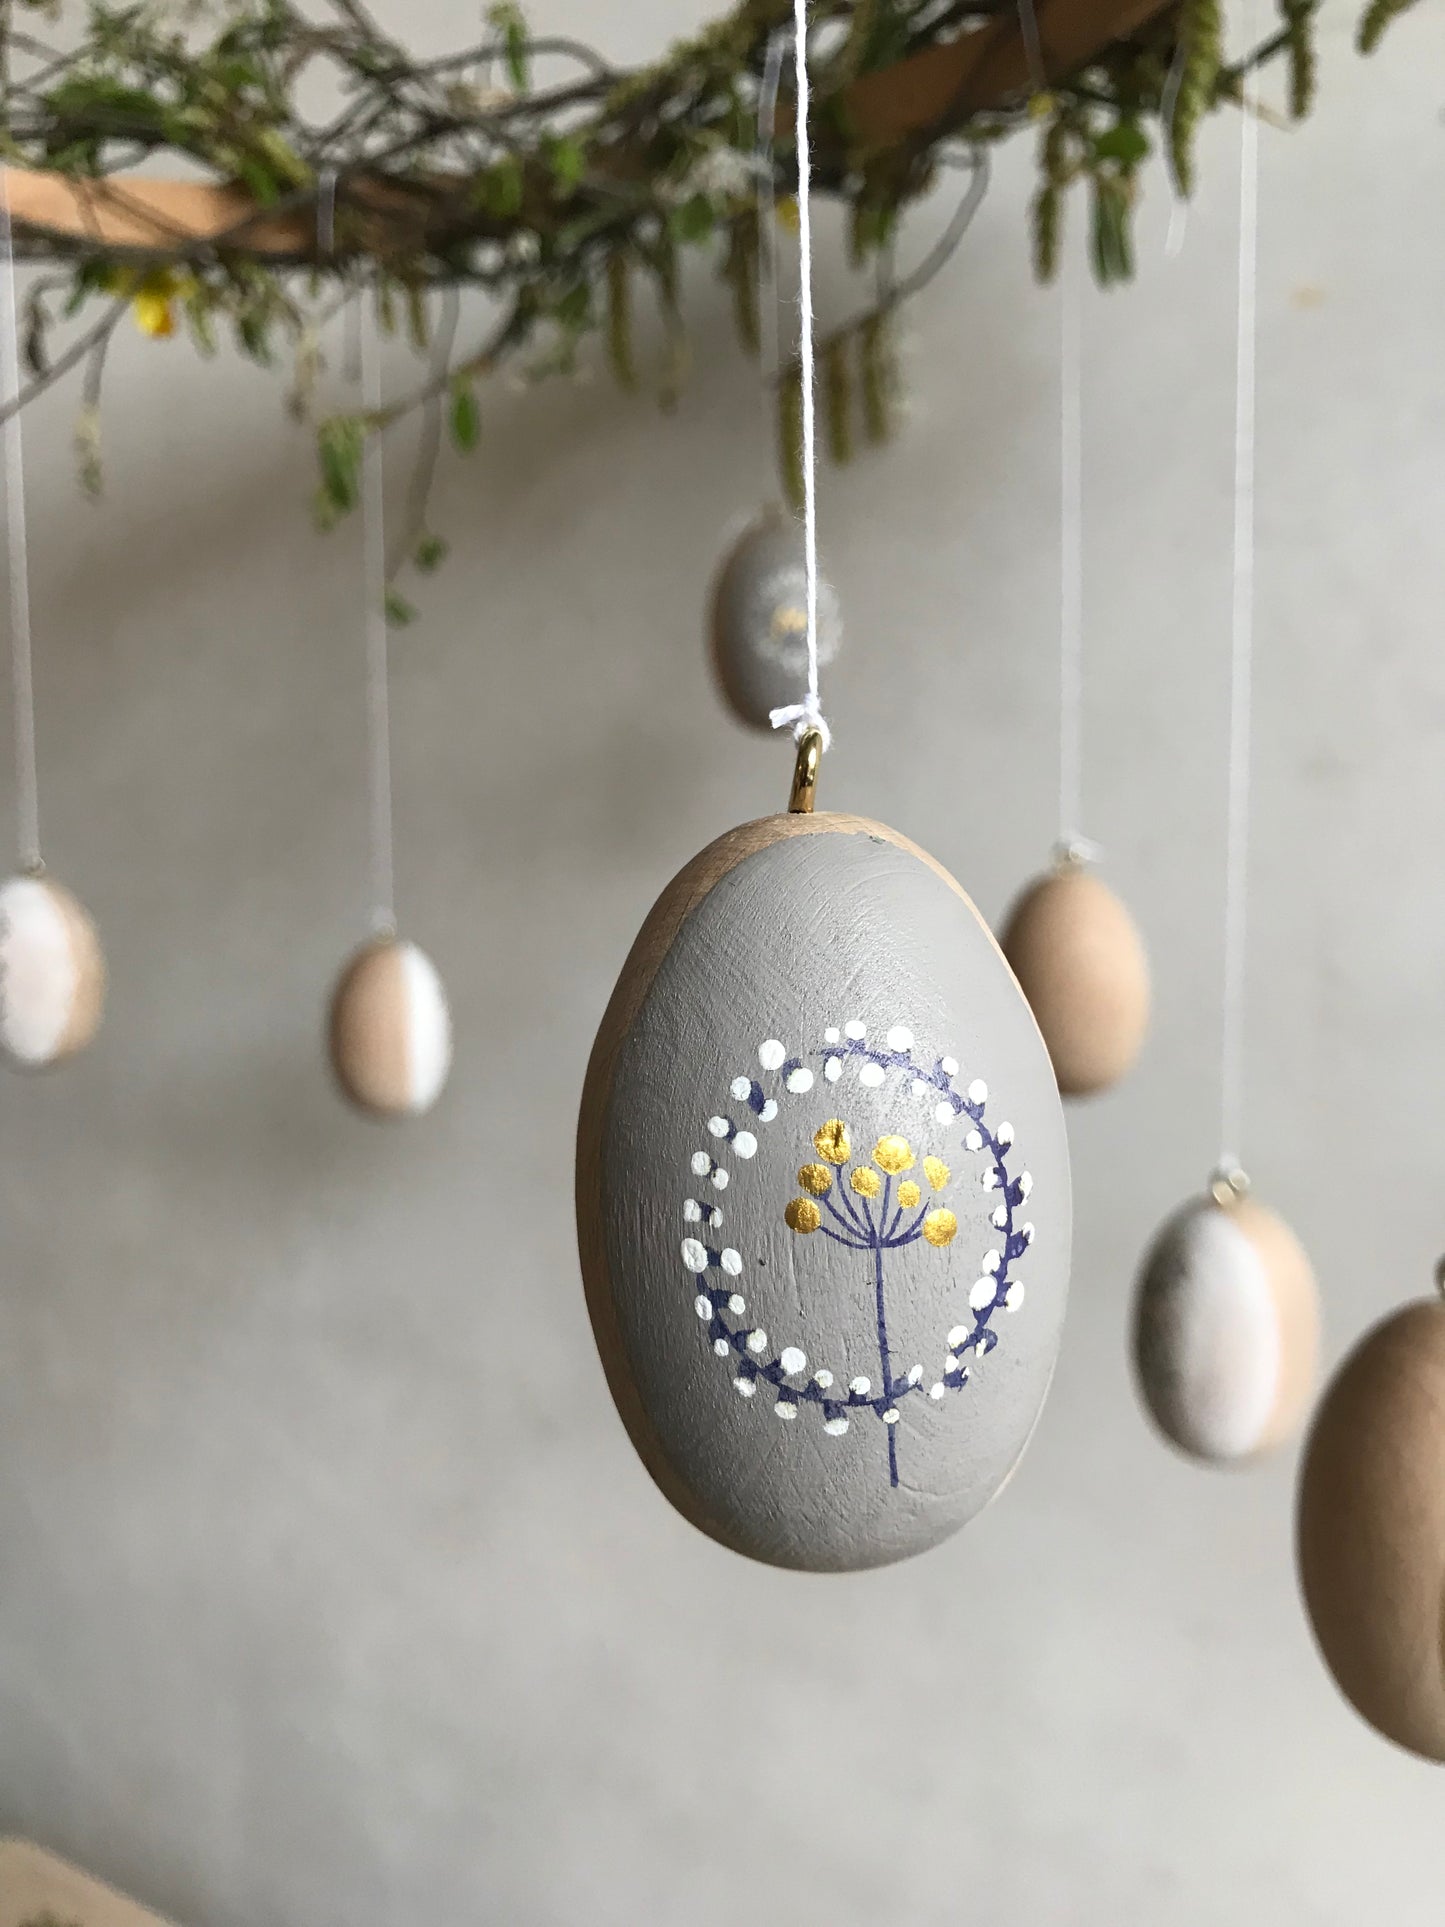 Handpainted Easter eggs